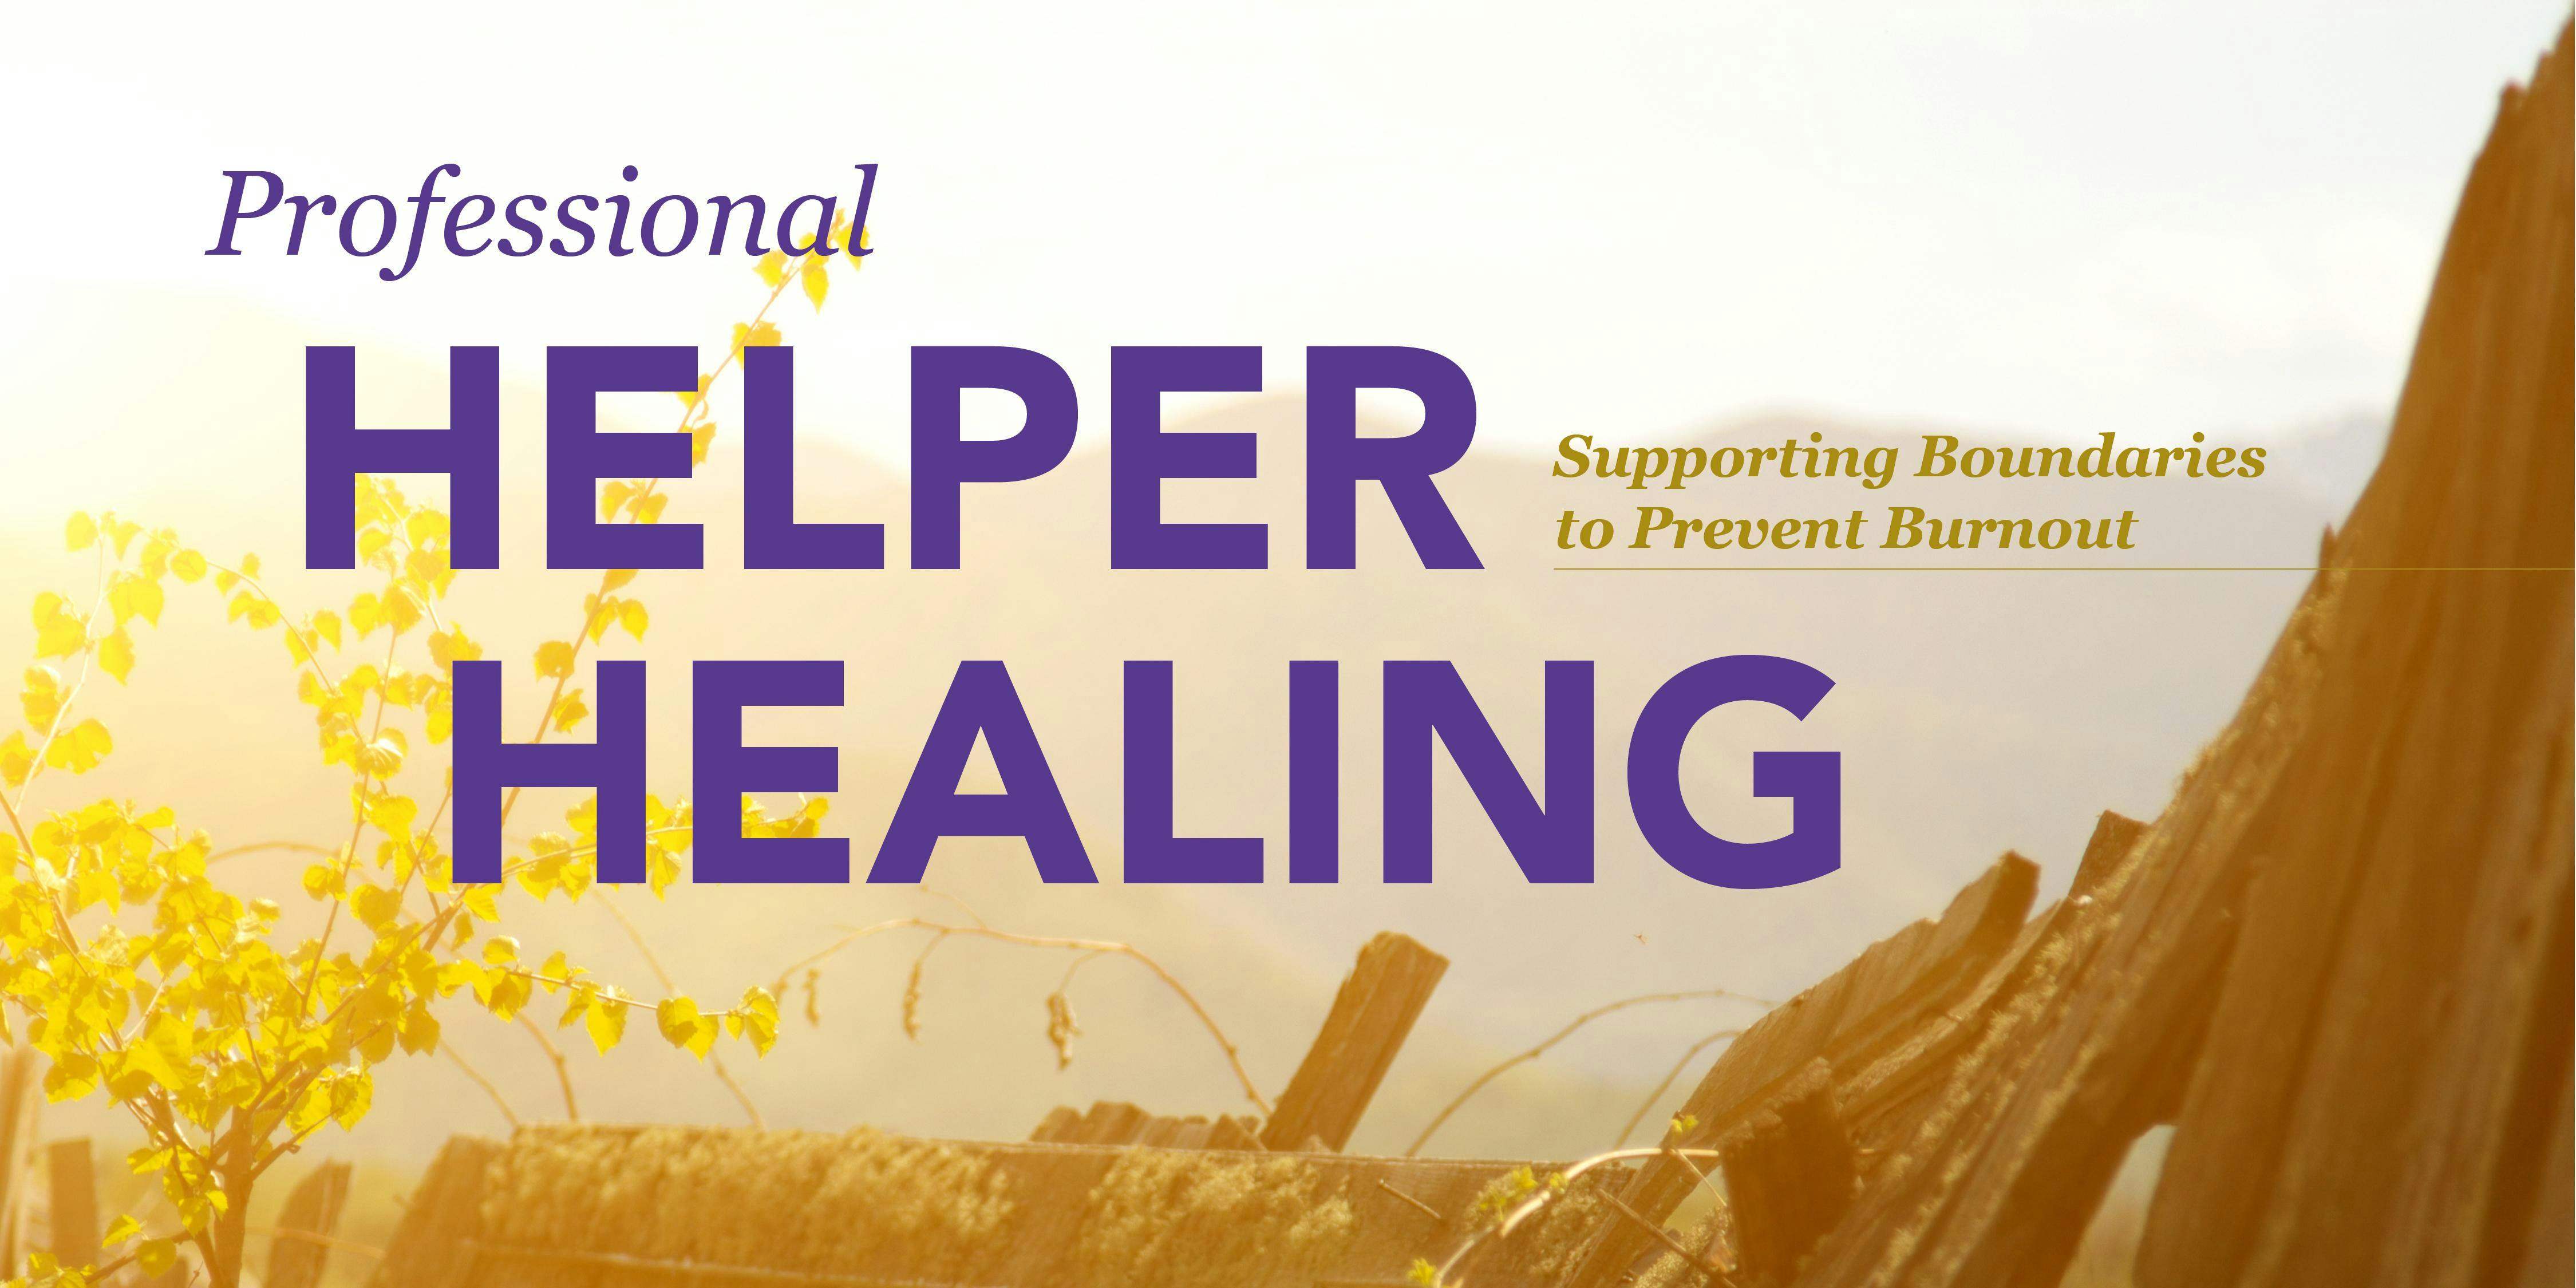 Professional Helper Healing